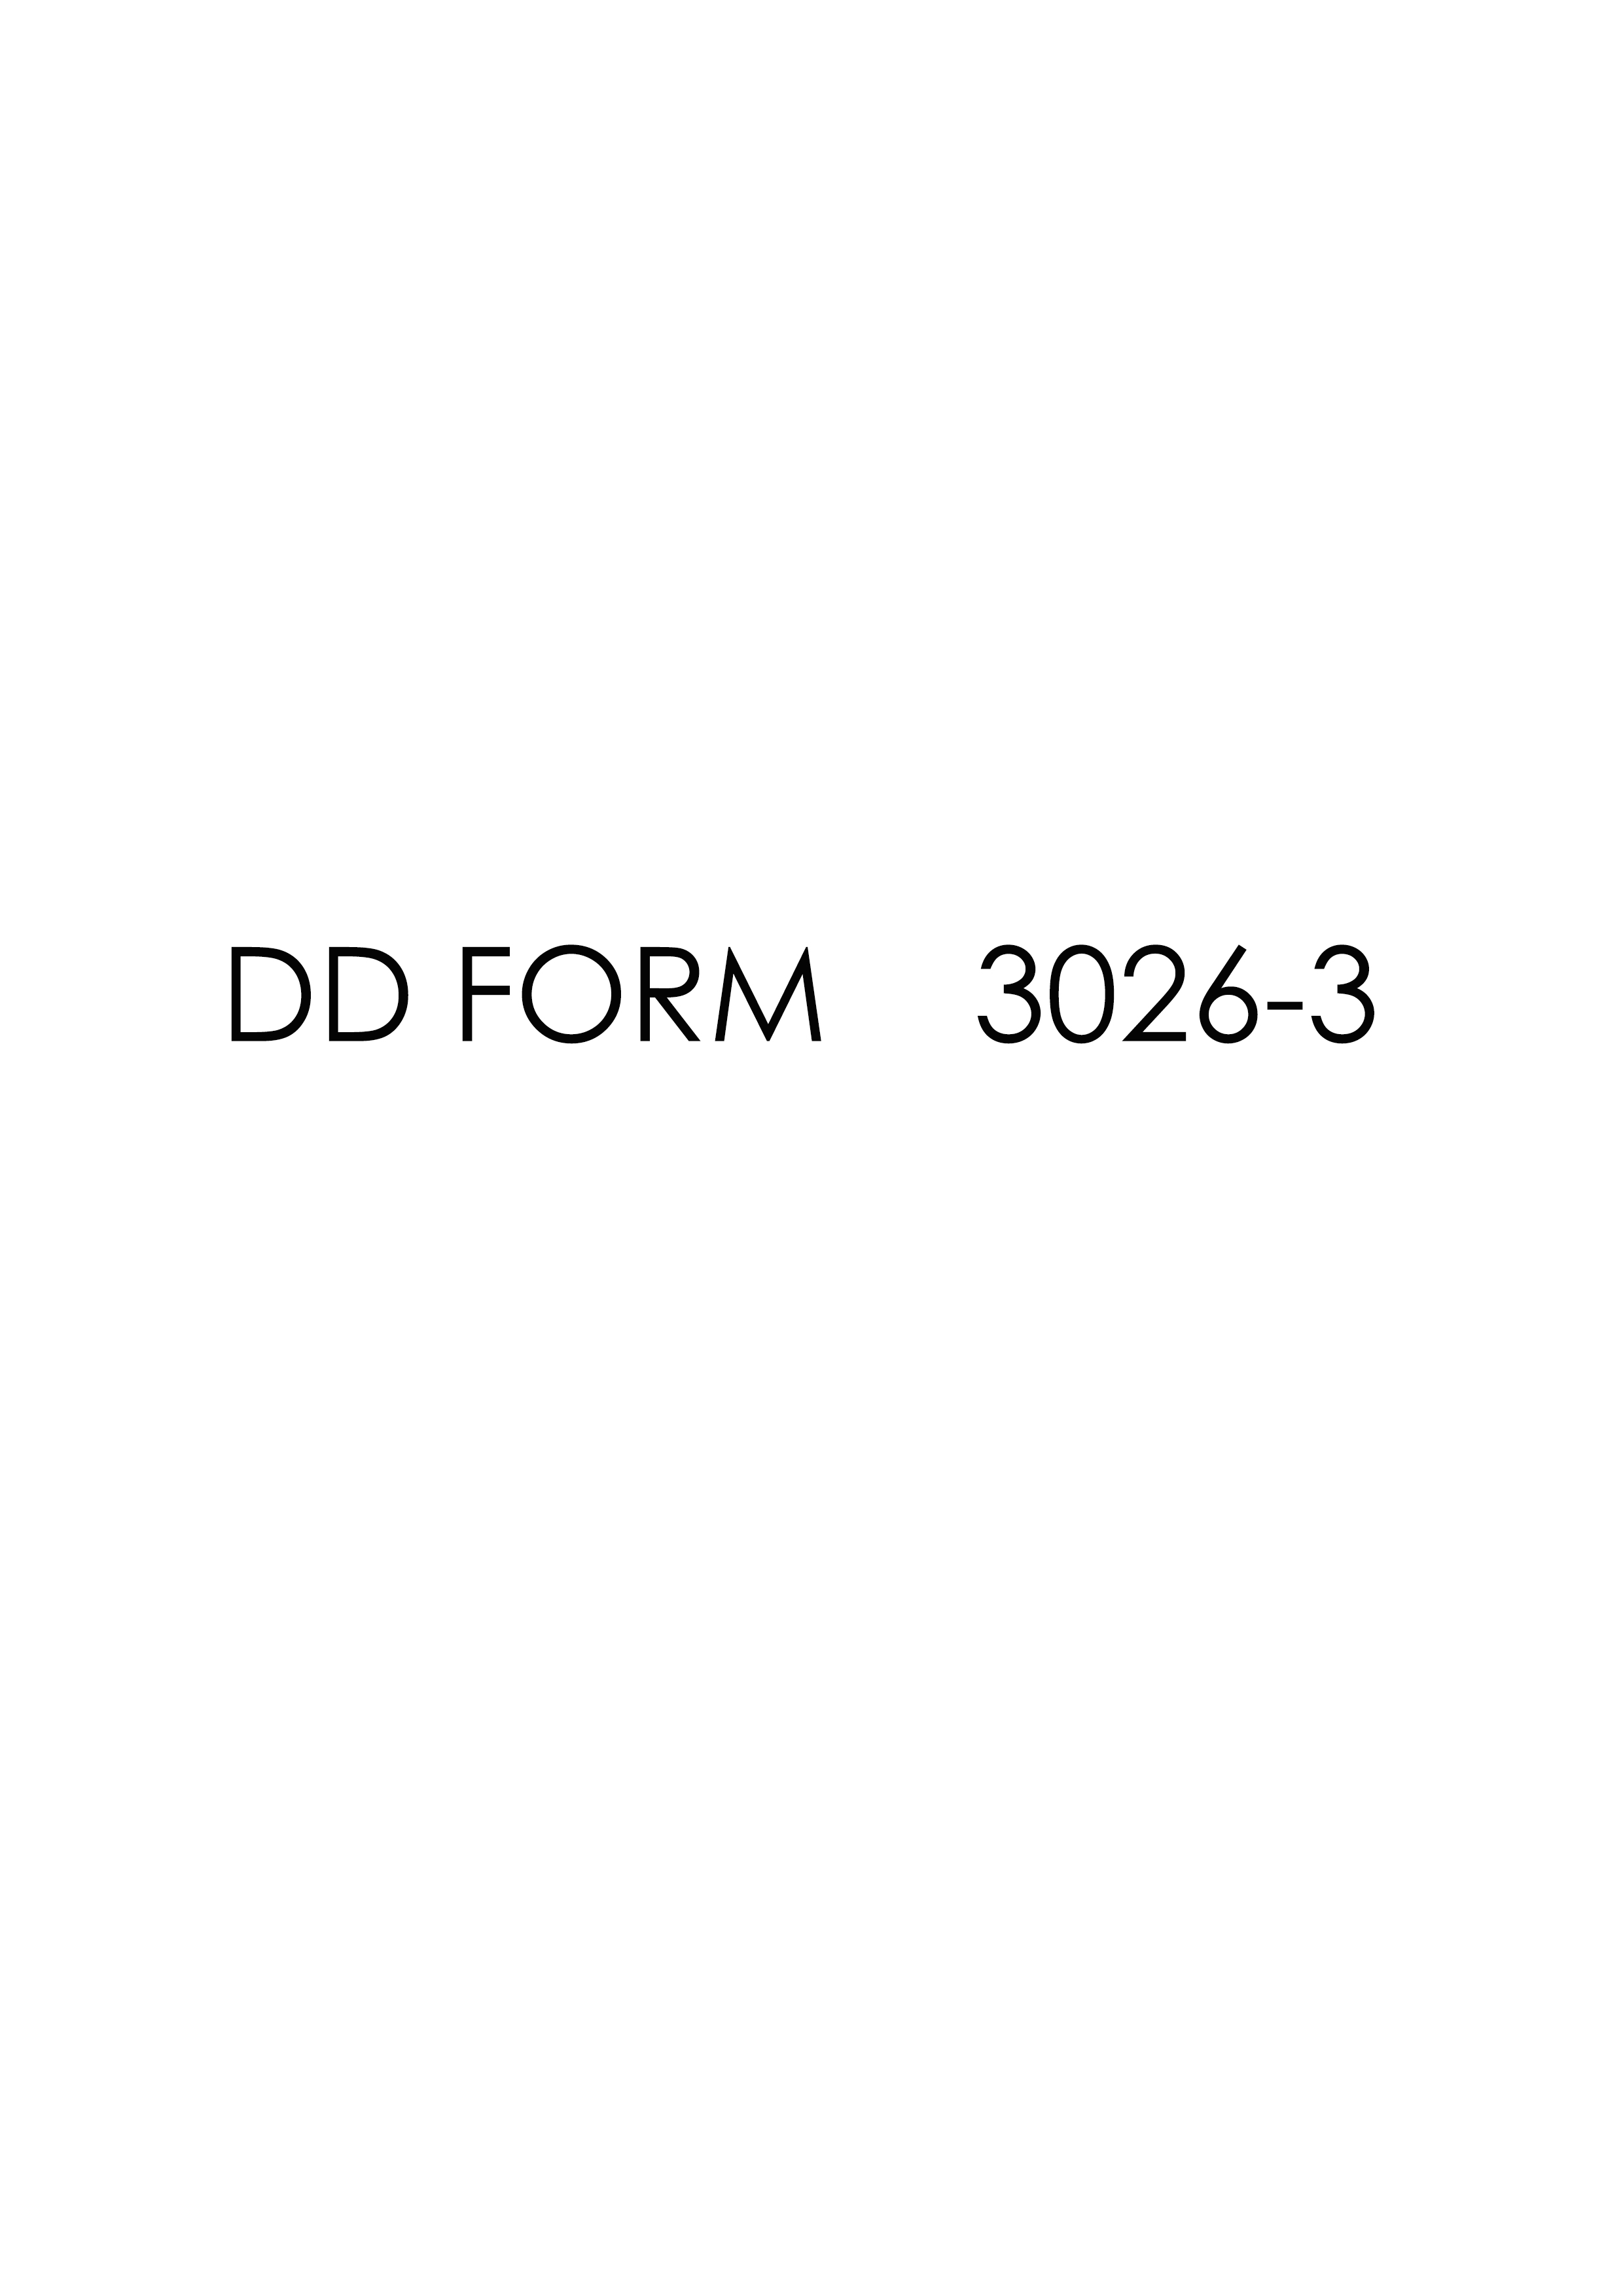 Download dd 3026-3 Form